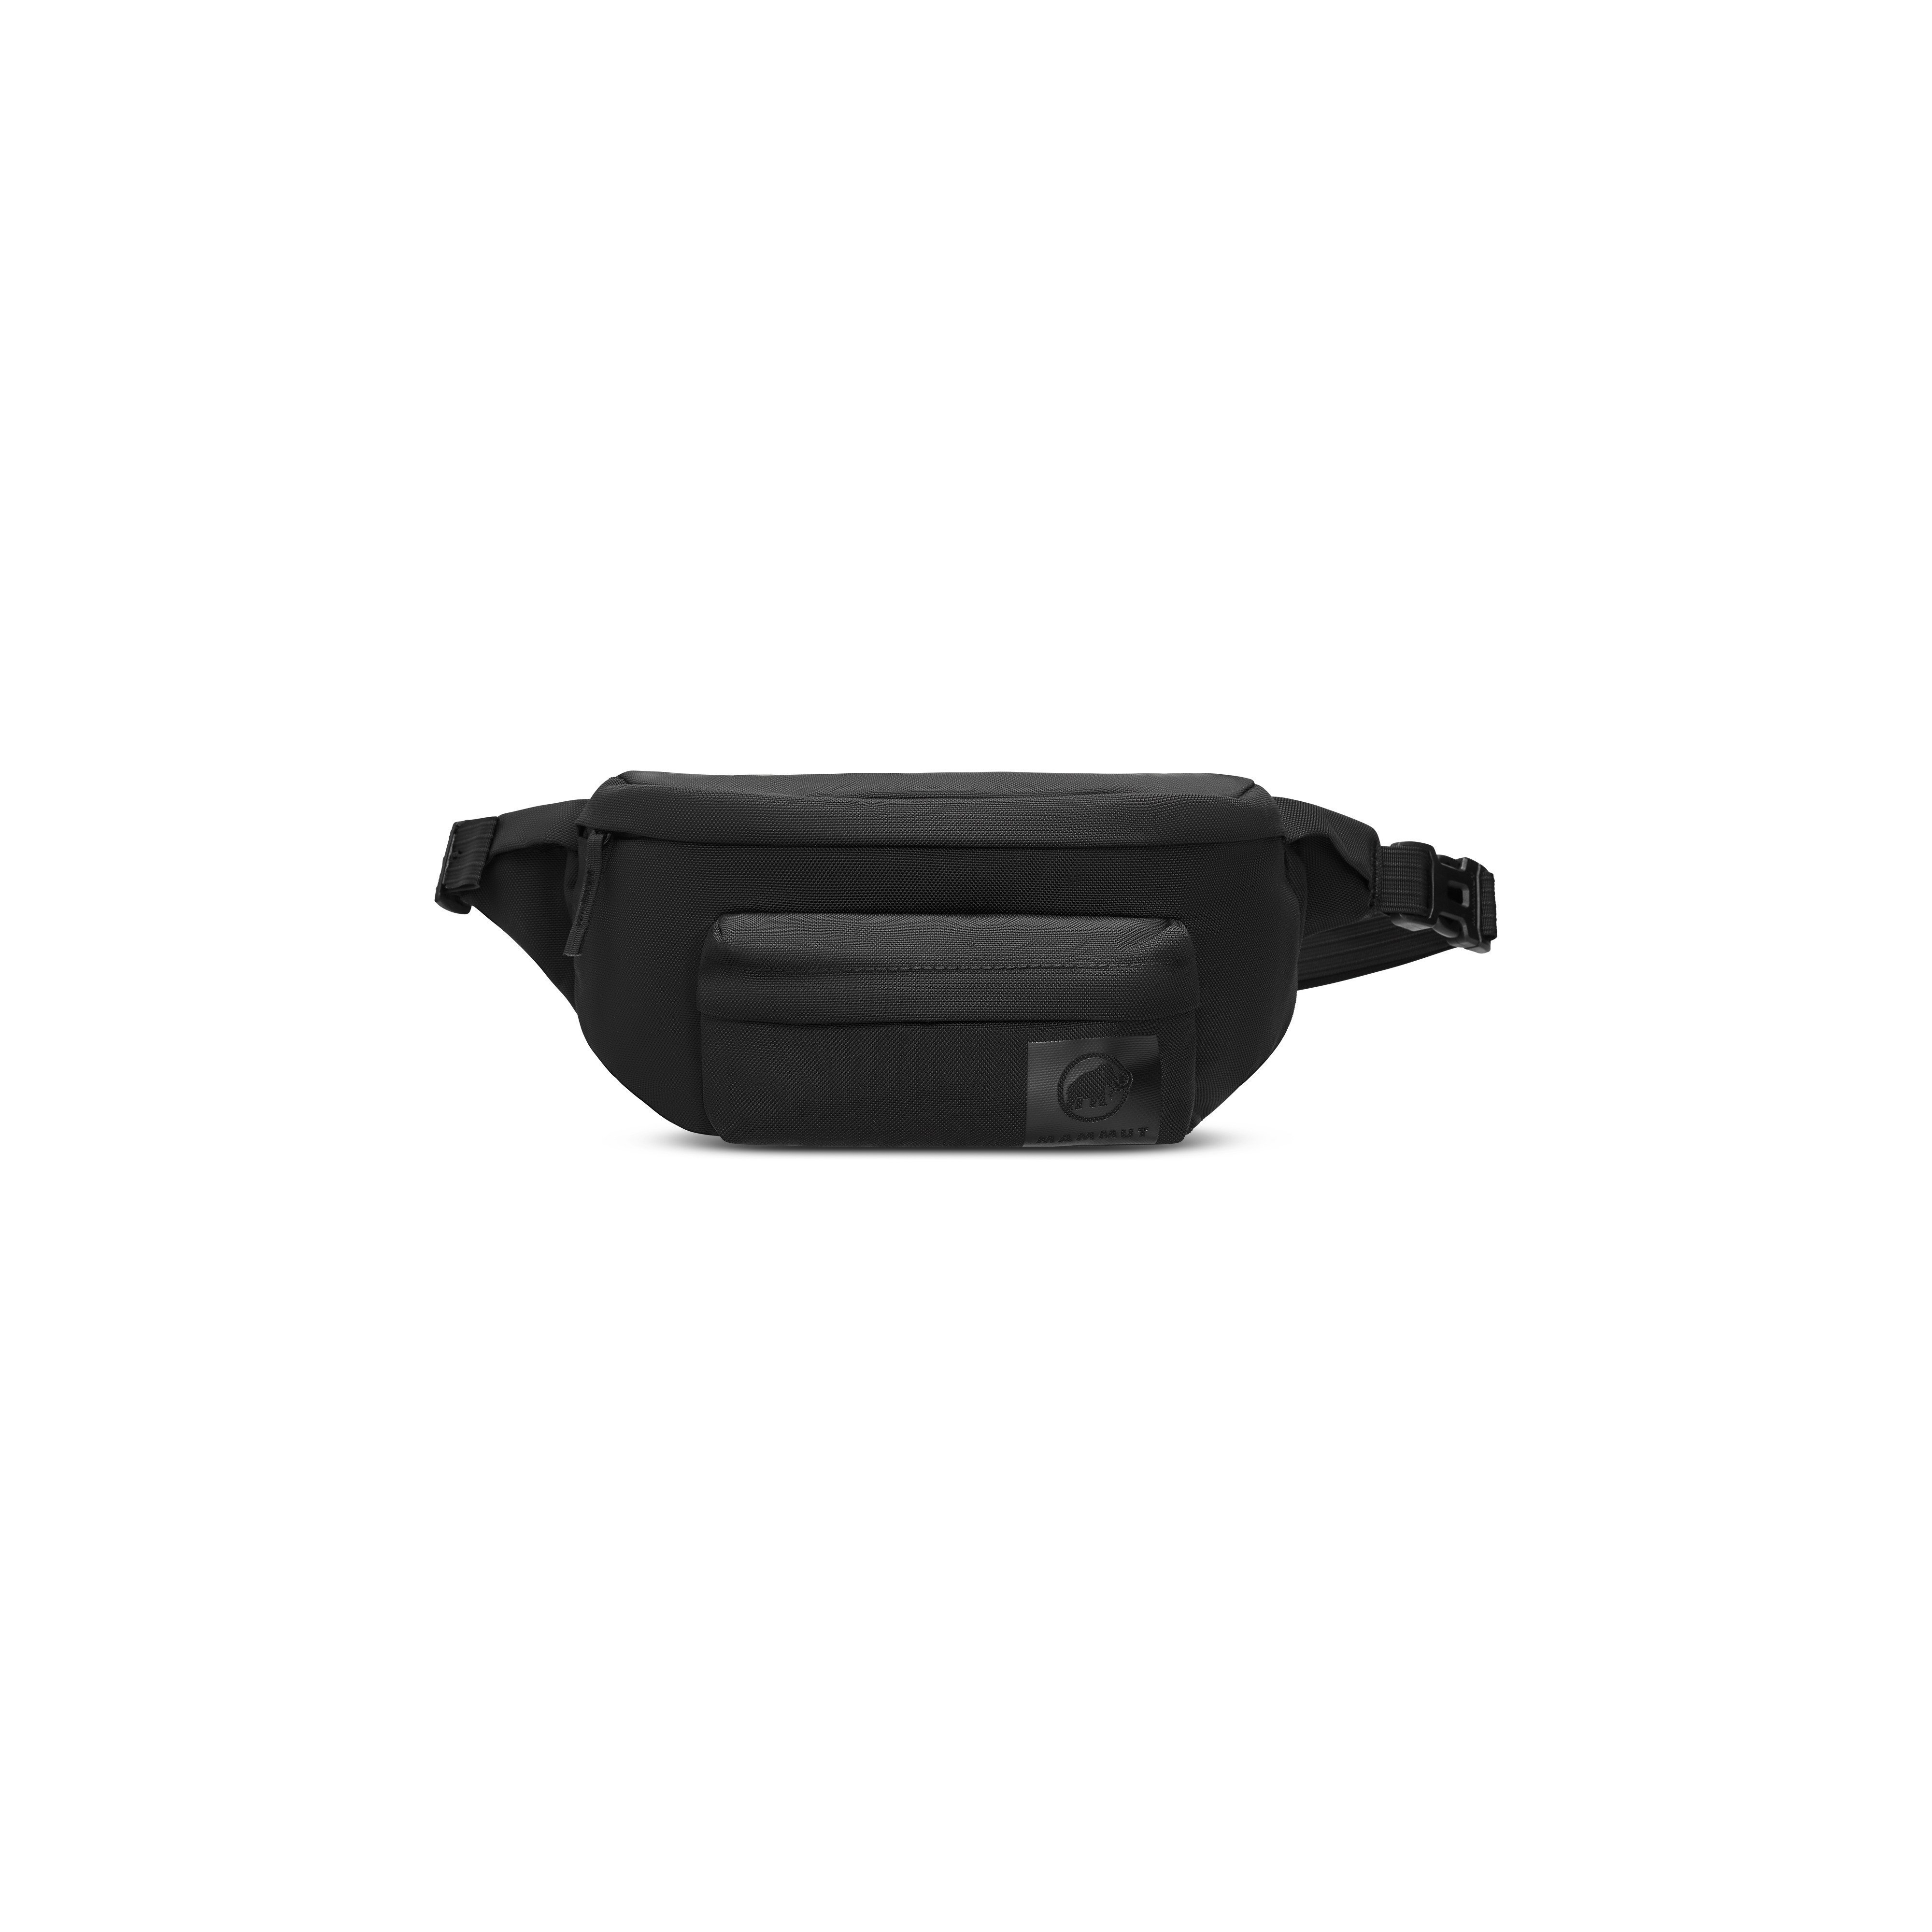 Xeron Neuveville Waistpack - black, 2 L product image